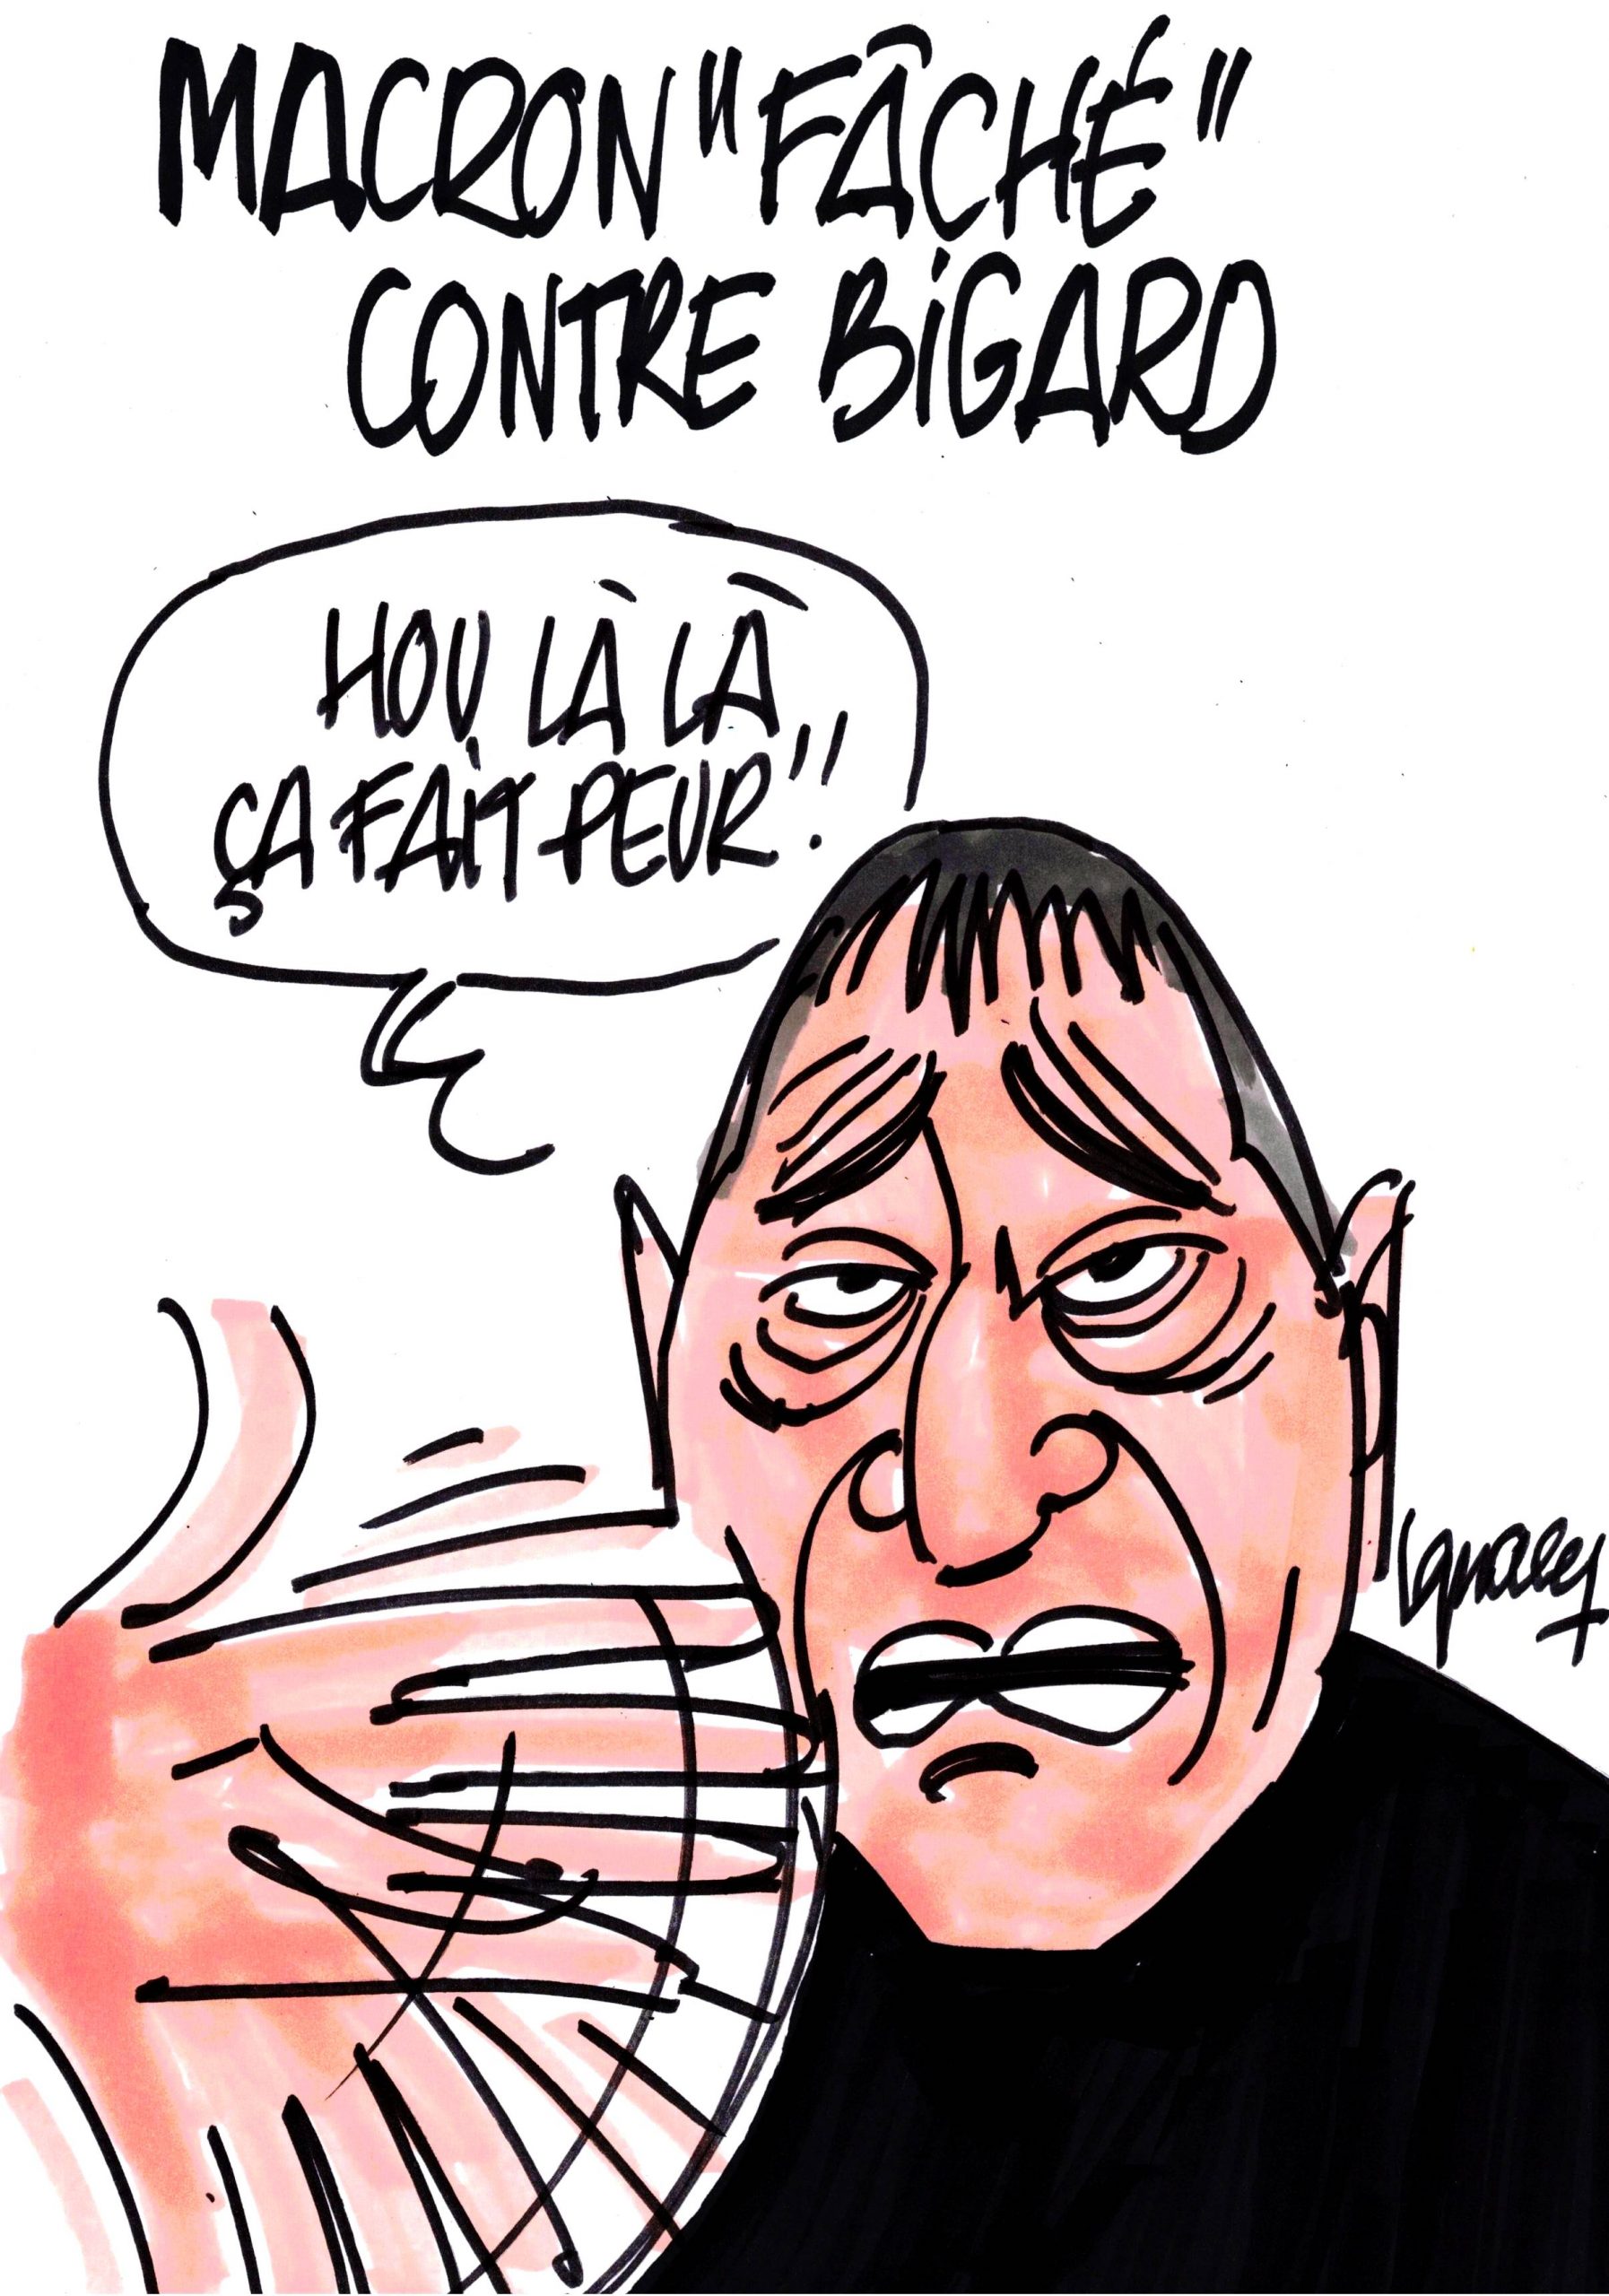 Ignace - Macron "fâché" contre Bigard